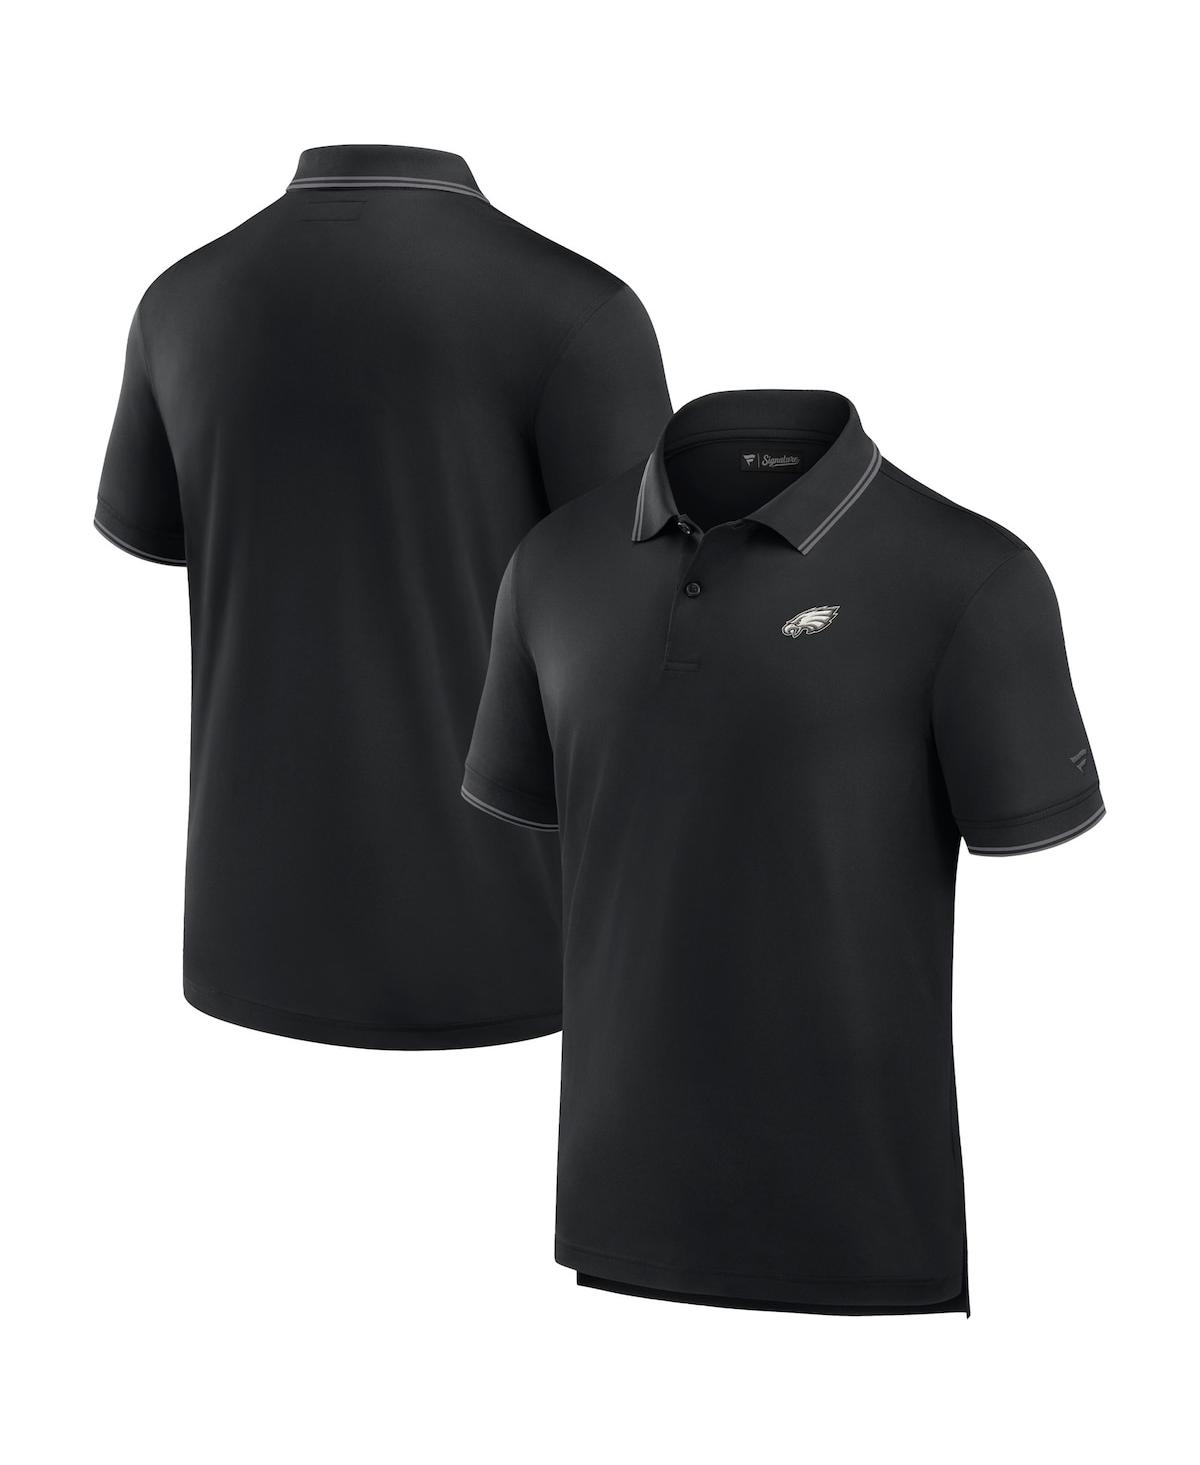 Men's Fanatics Signature Black Philadelphia Eagles Pique Polo Shirt - Black